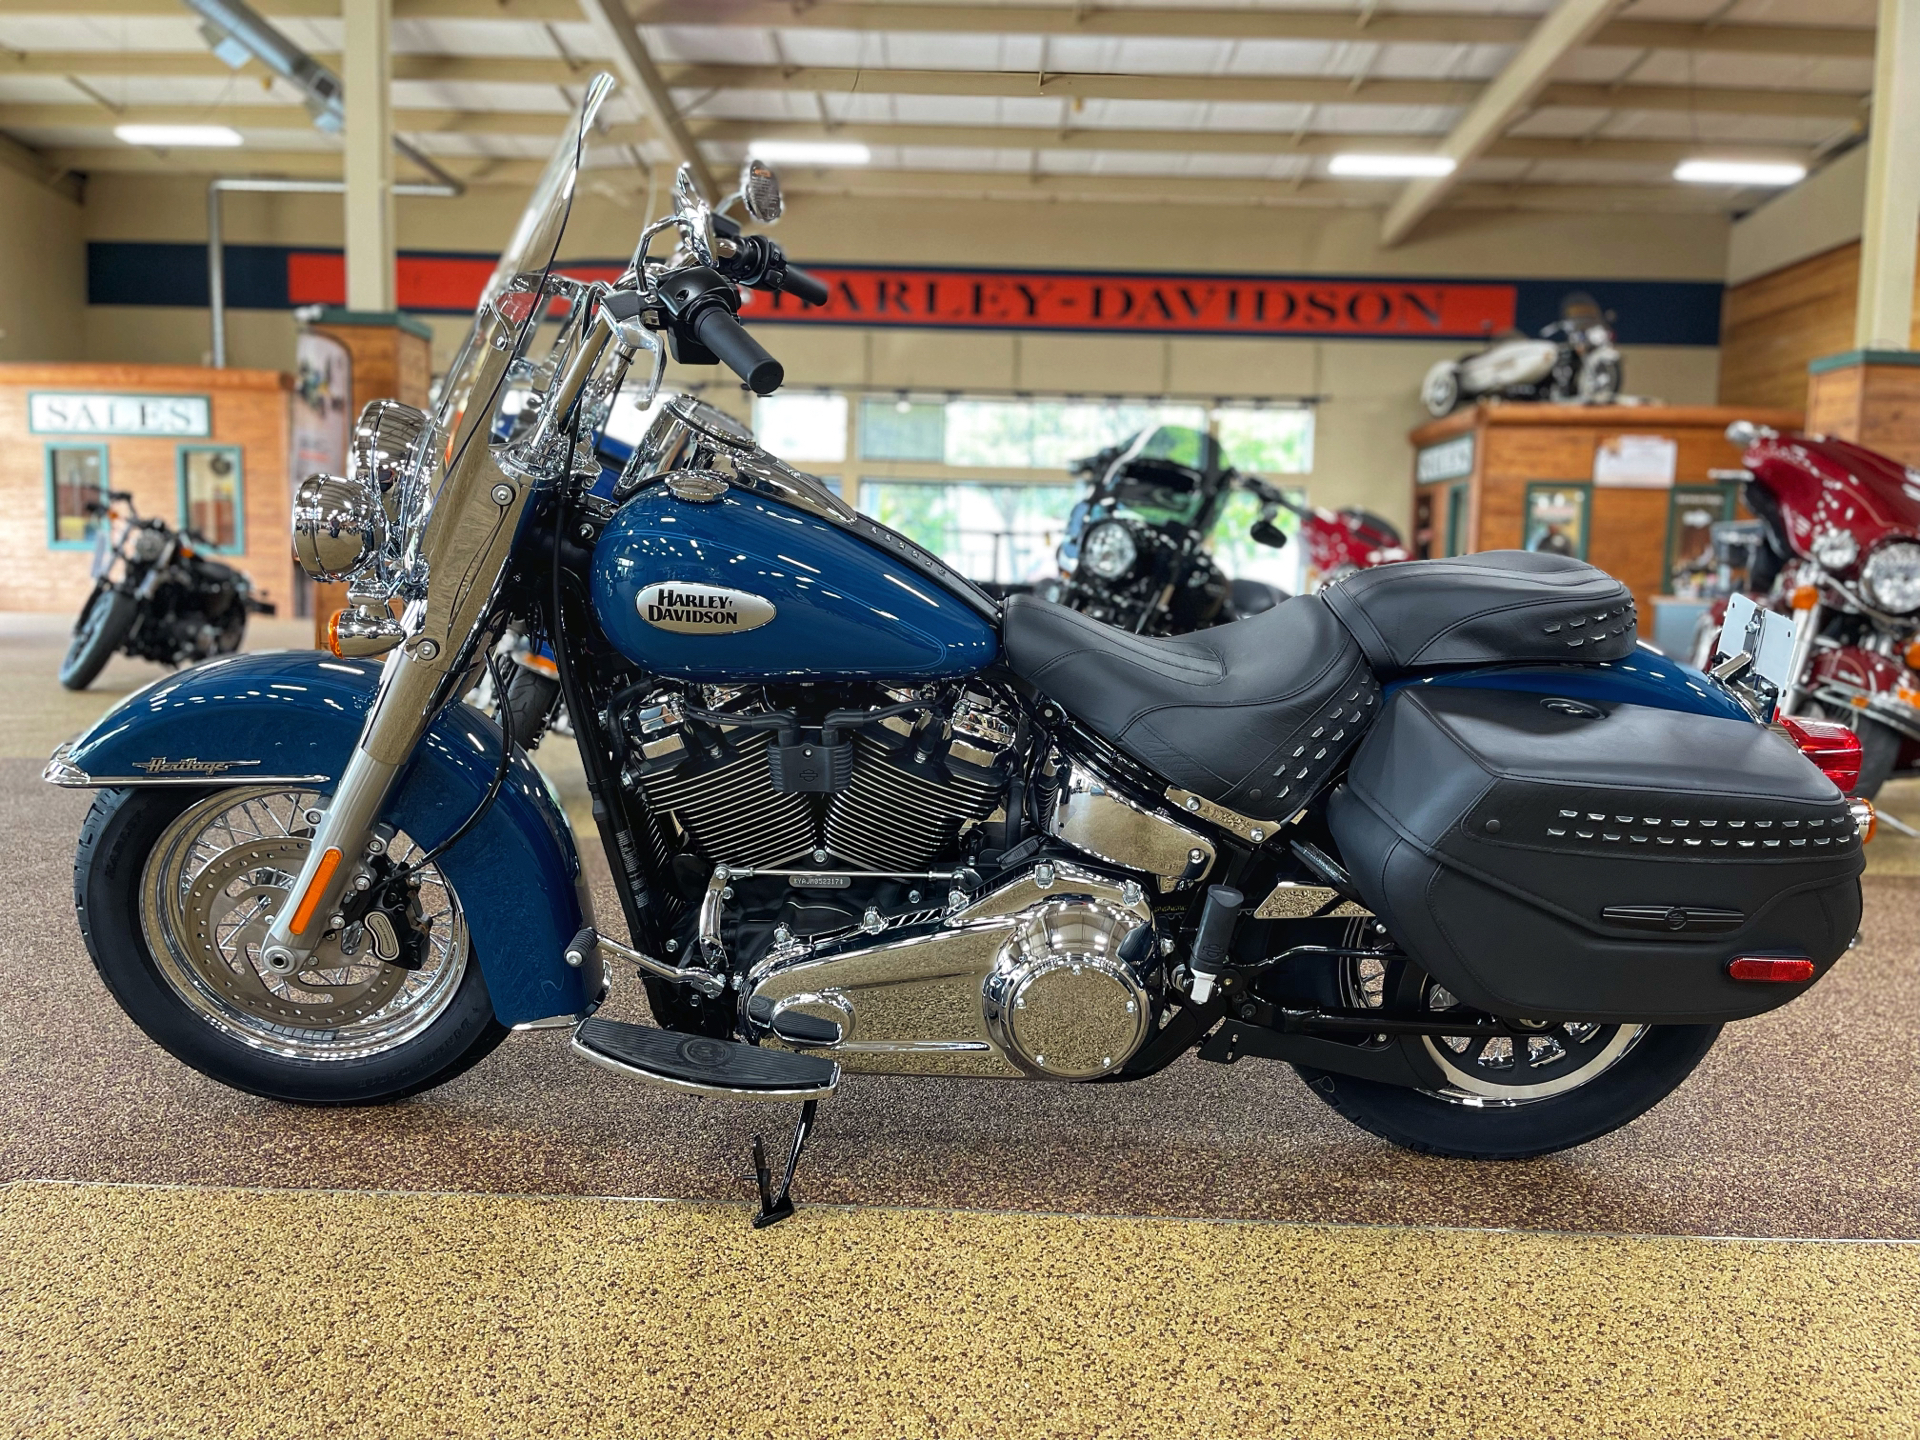 New 2021 Harley Davidson Heritage Classic Billiard Teal Motorcycles In Sauk Rapids Mn 052317